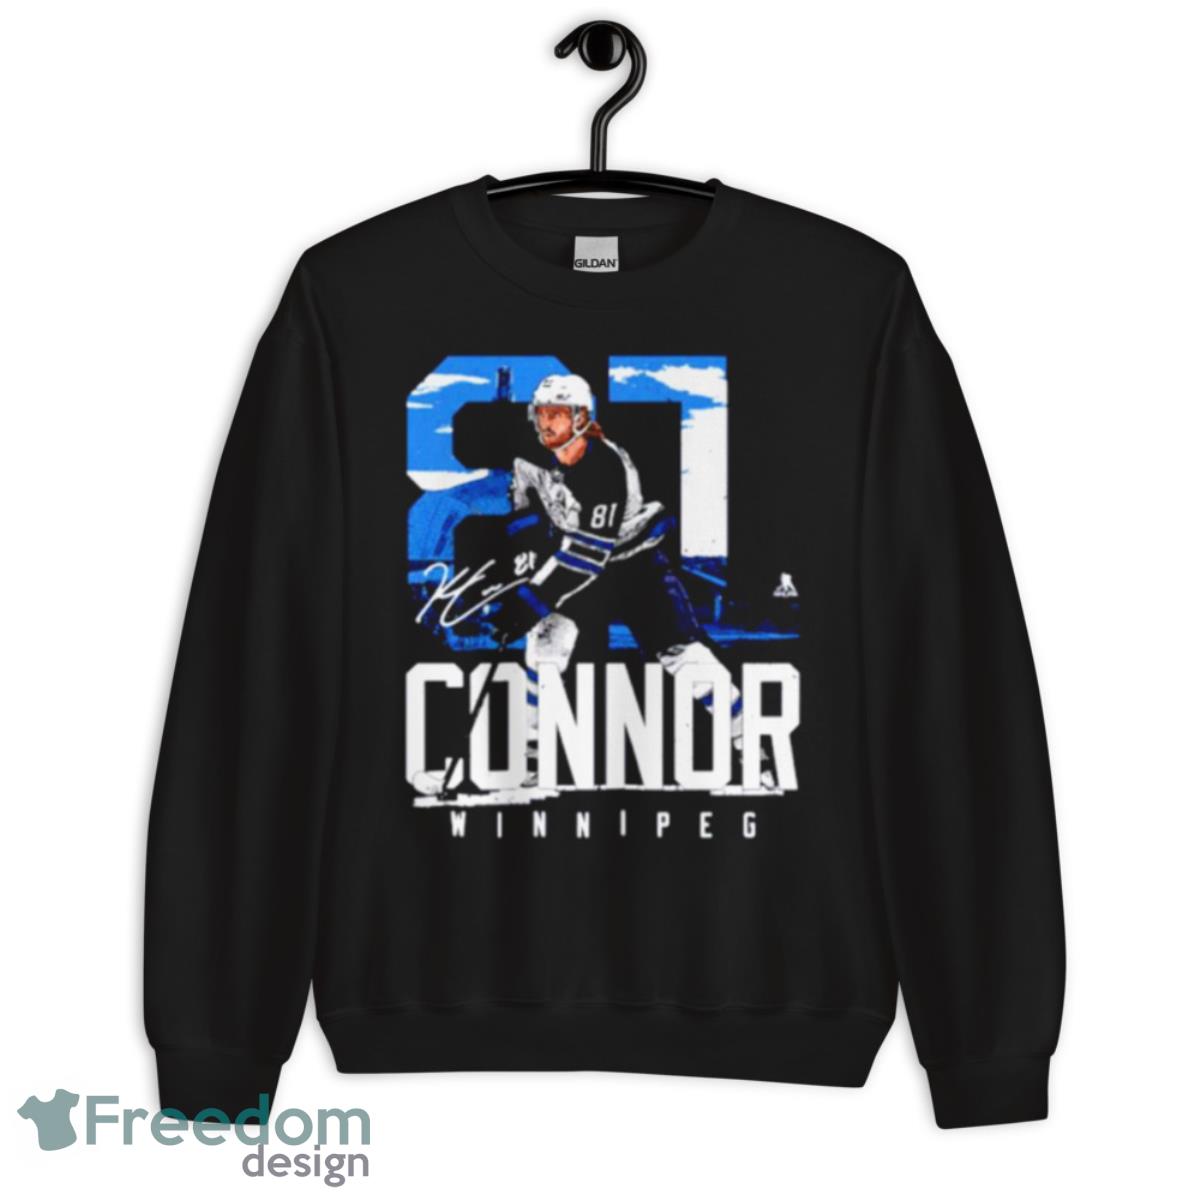 Kyle Connor Winnipeg Landmark Hockey Shirt